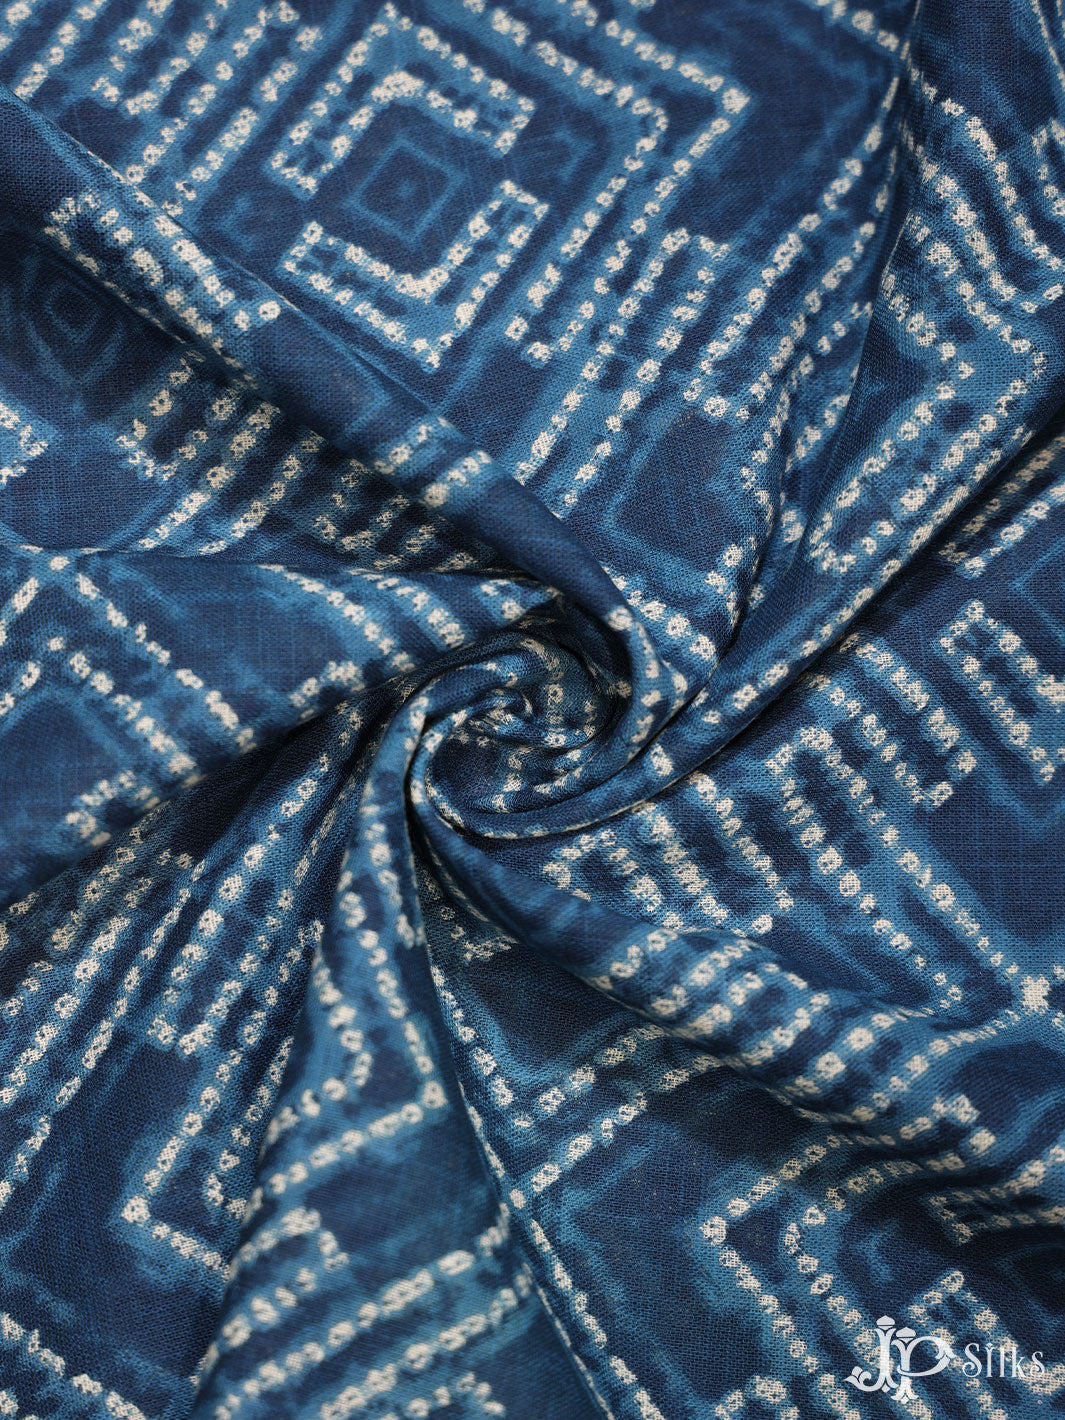 Indigo Blue Digital Printed Cotton Fabric - D1771 - View 3